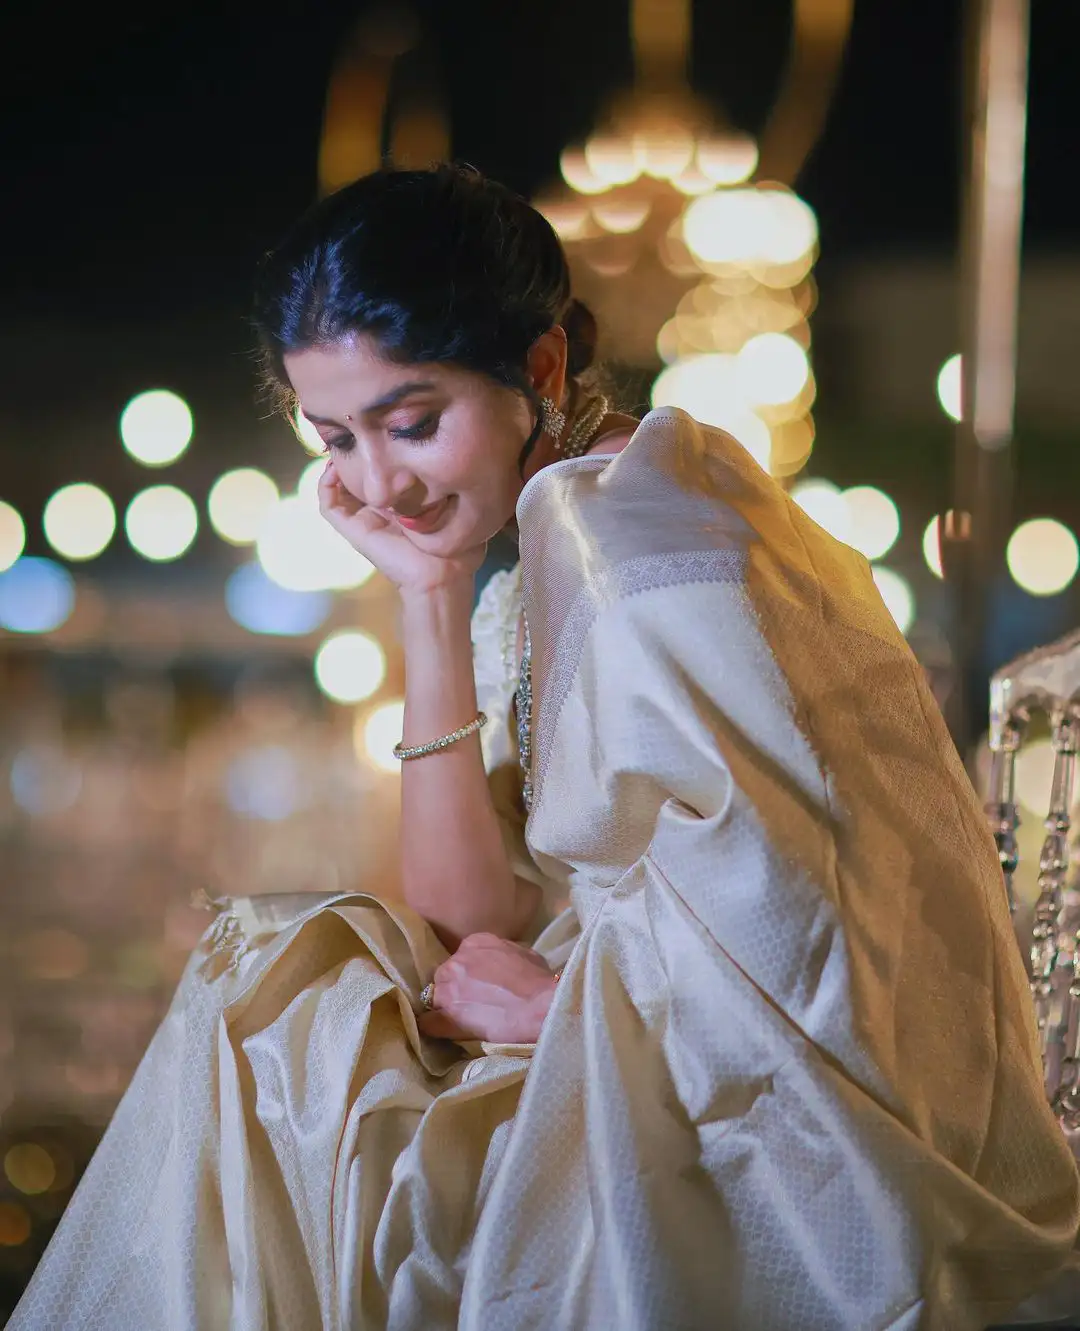 Meera Jasmine shines in silk saree 